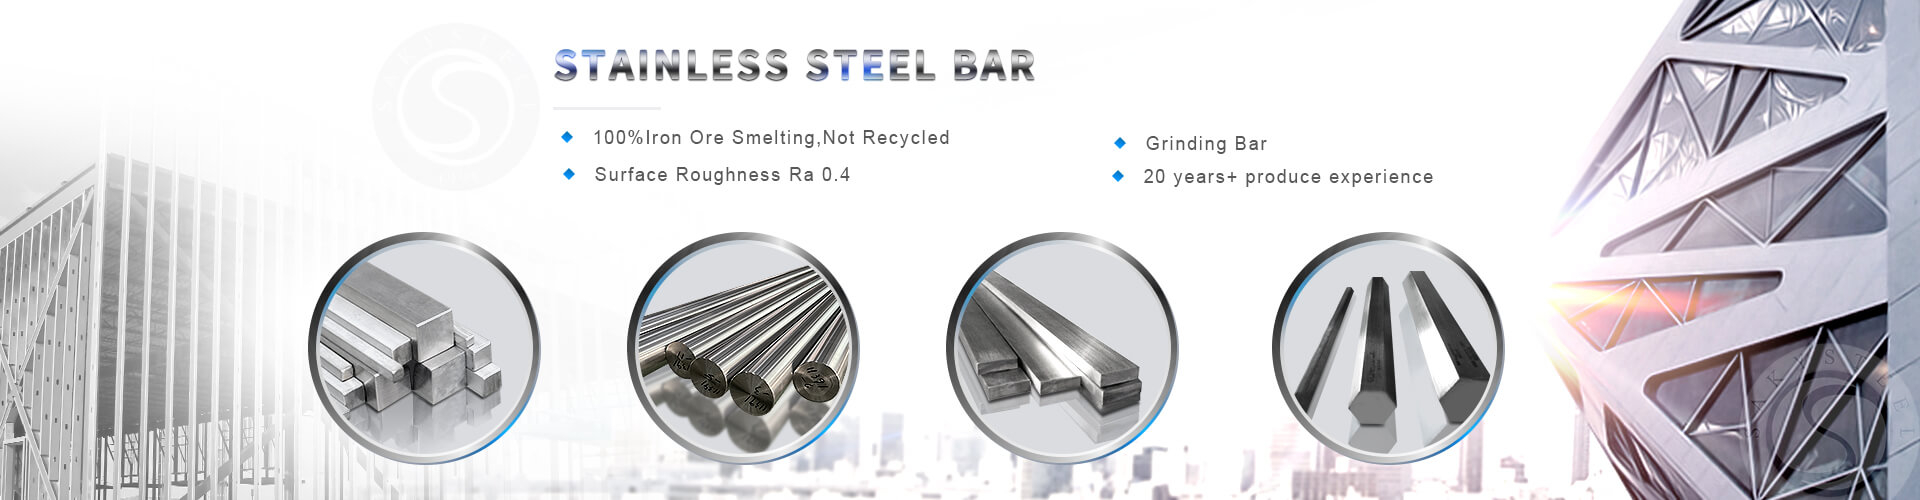 Stainless Steel Bars From SakySteel   1.0